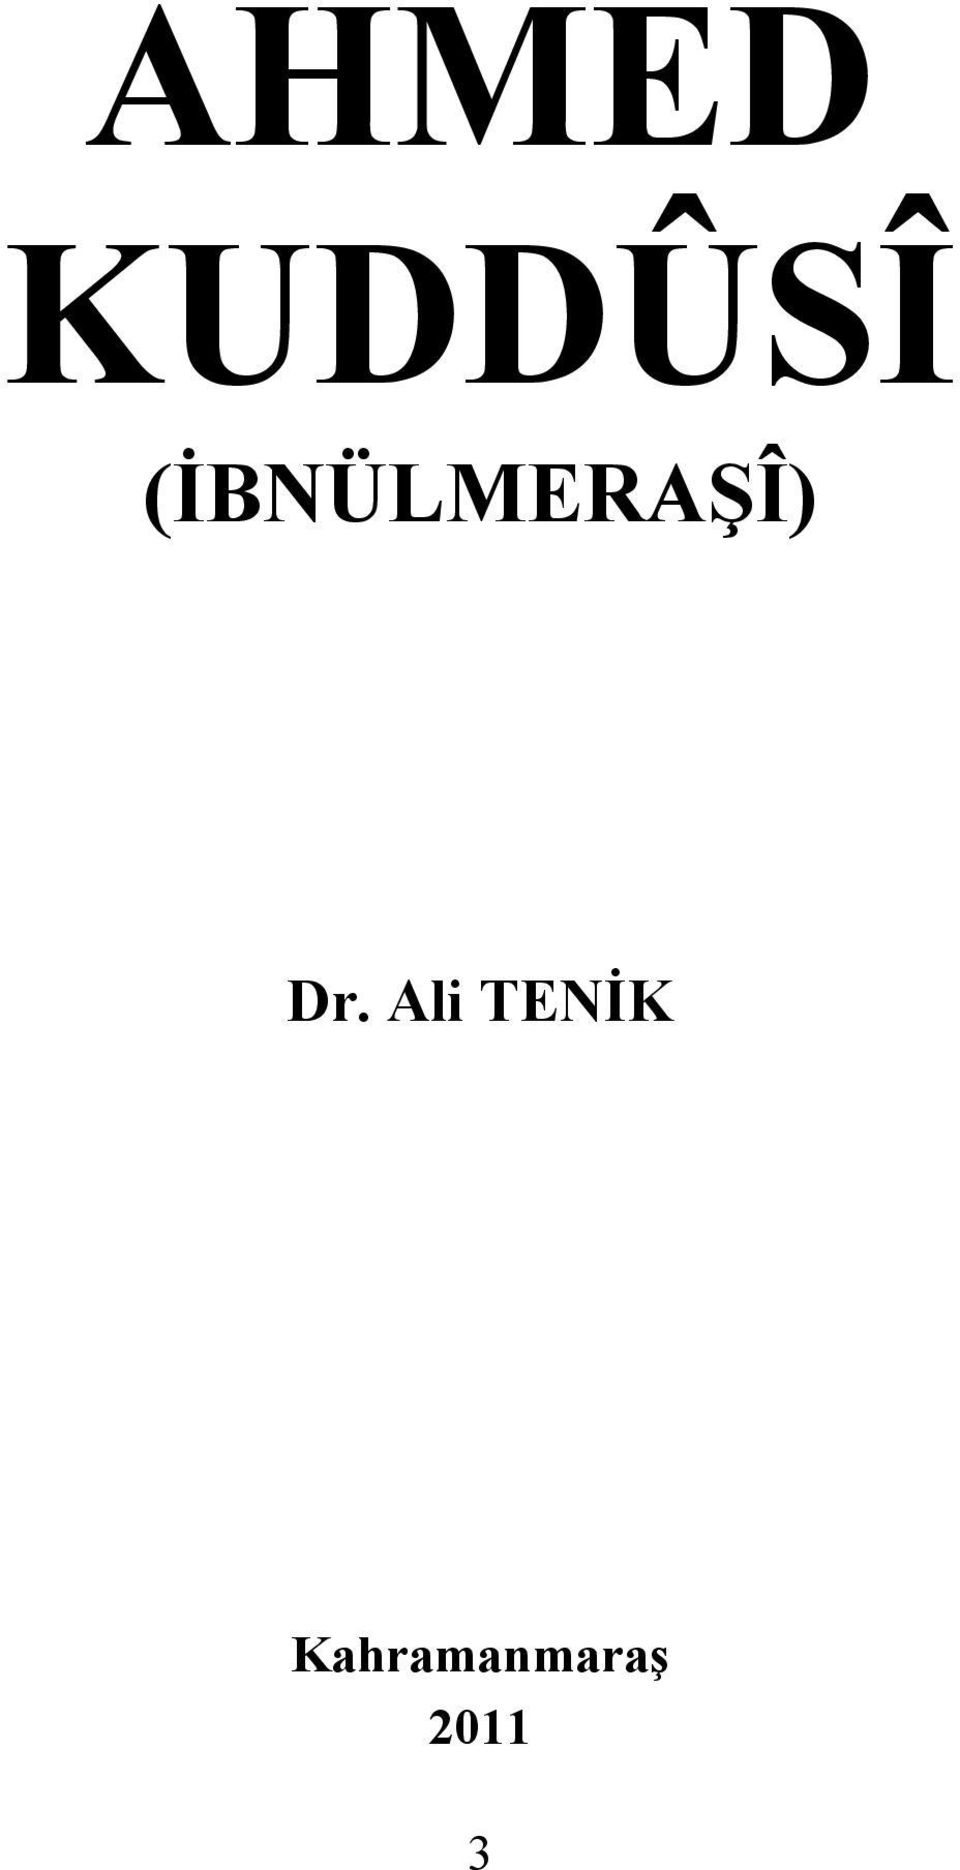 Dr. Ali TENĐK